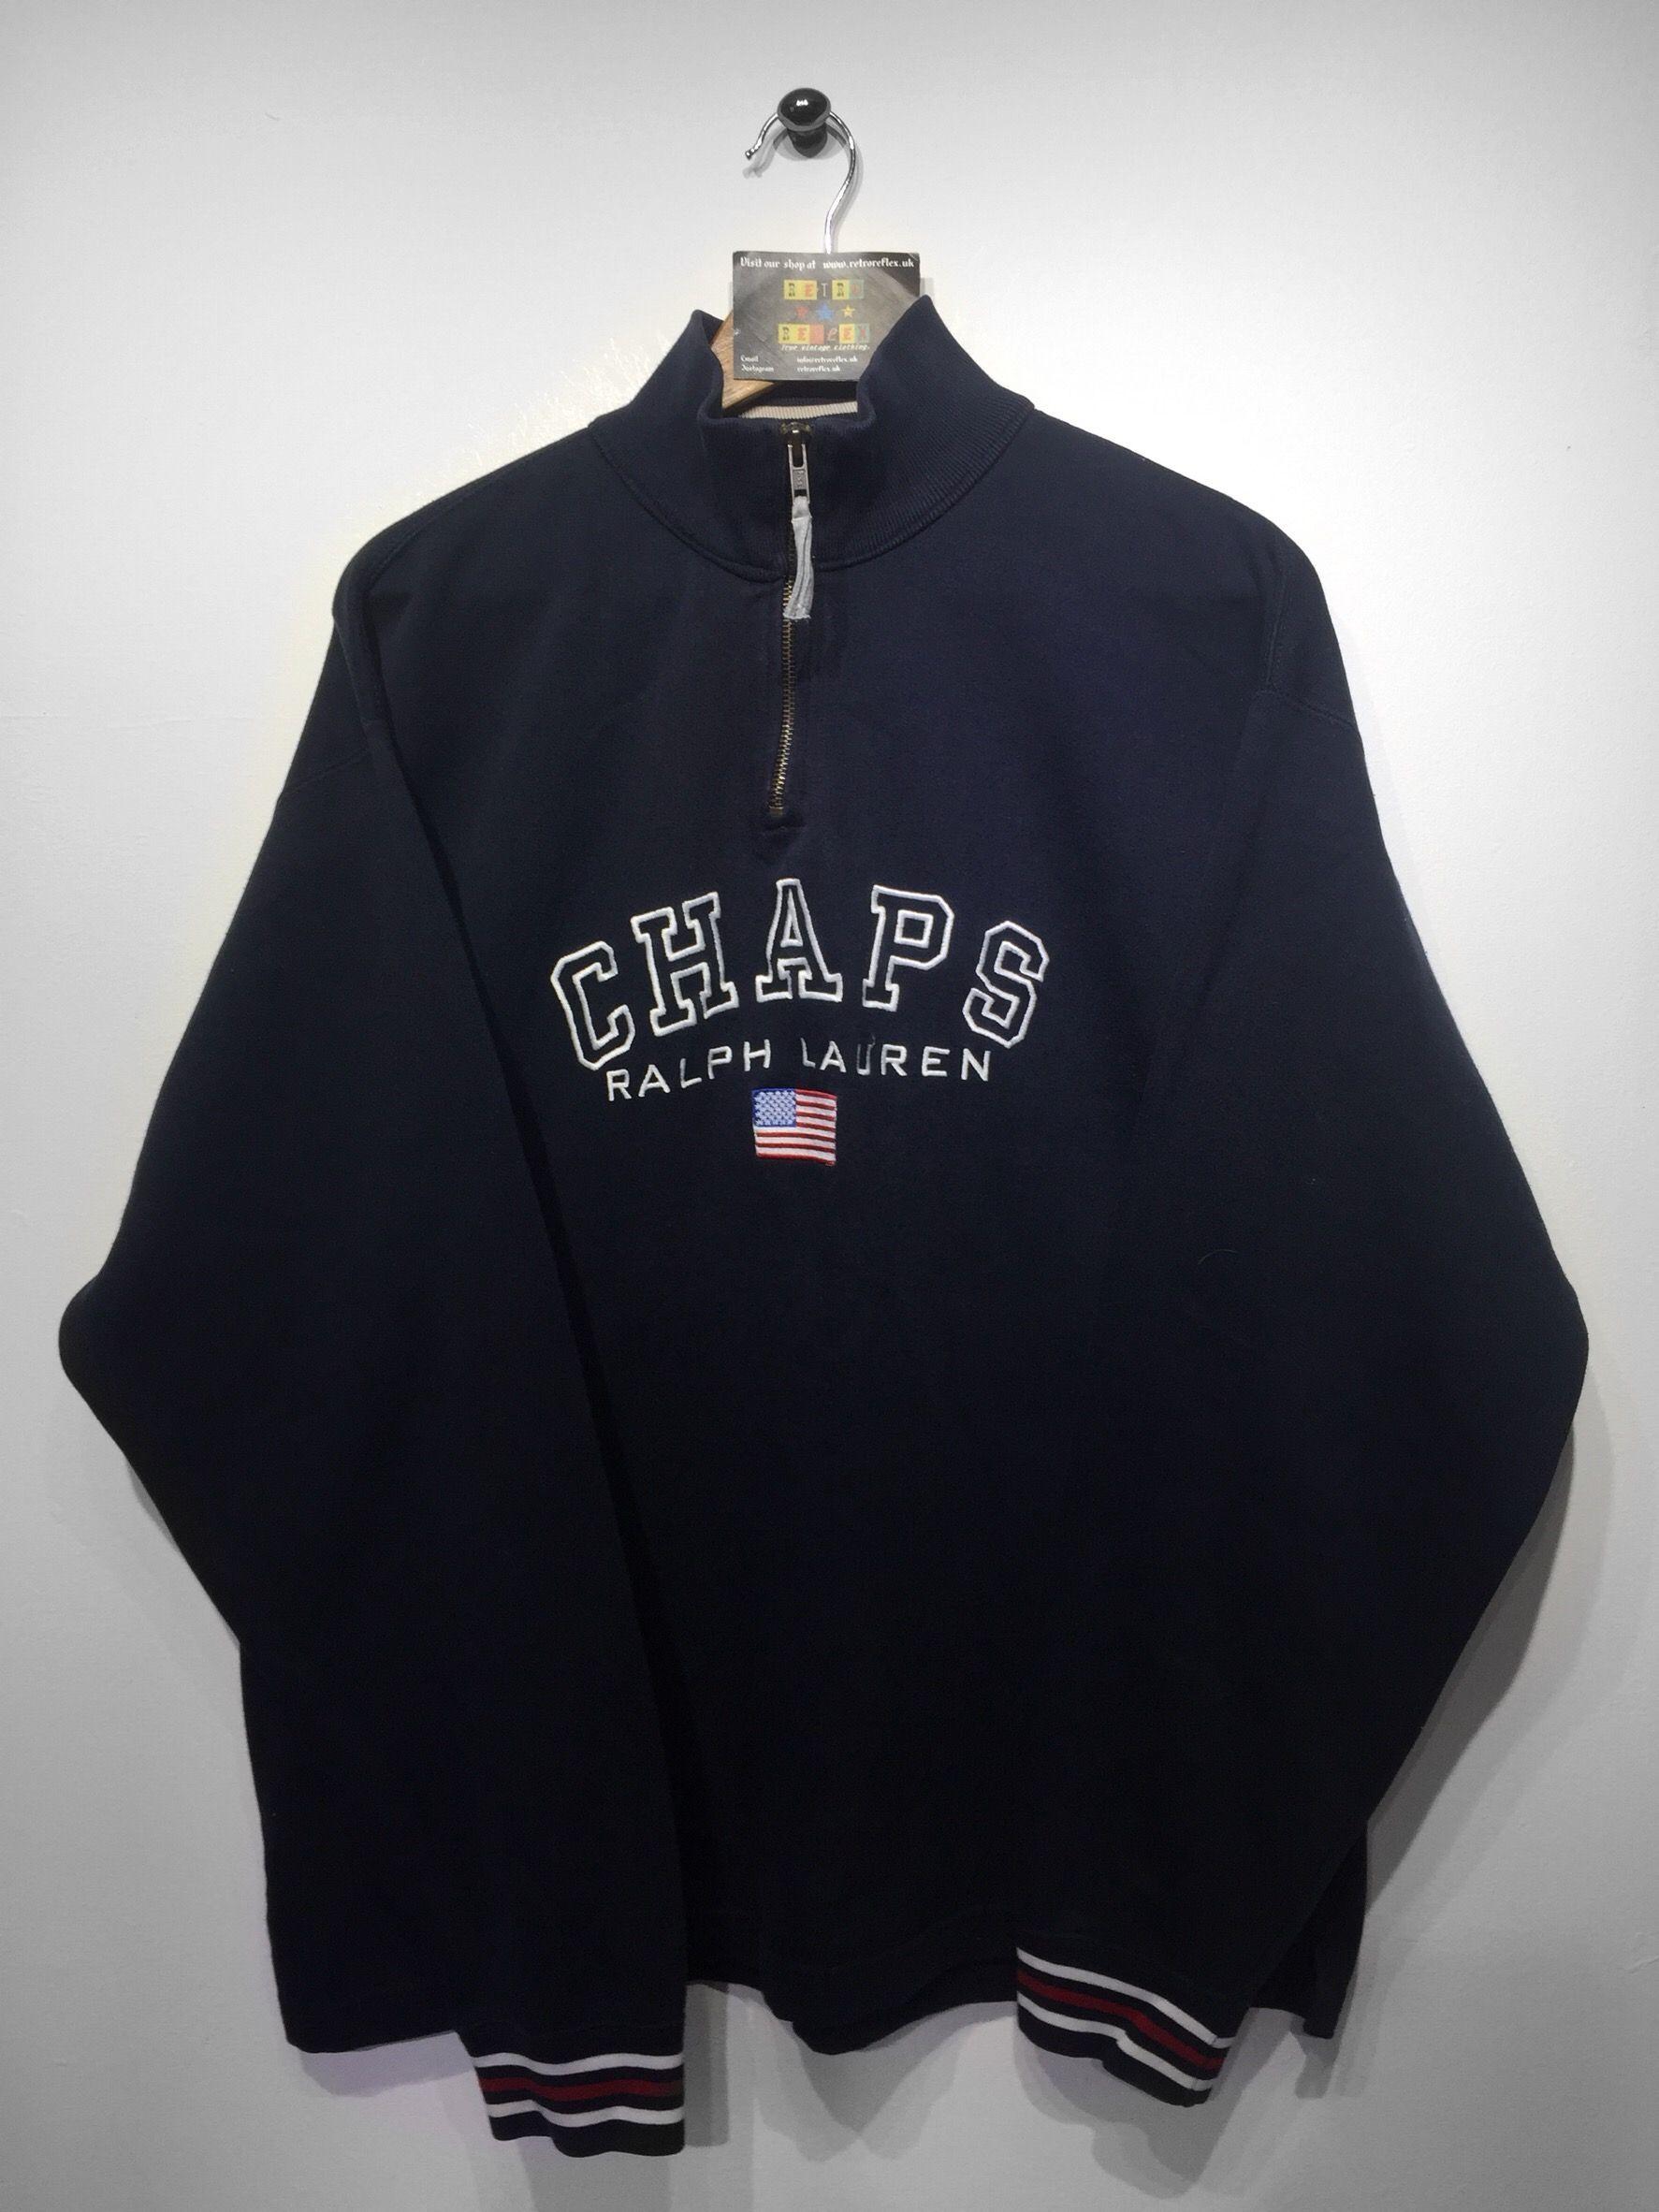 Chaps Clothing Logo - Ralph Lauren Chaps Sweatshirt size Large (but Fits Oversized) £50 ...